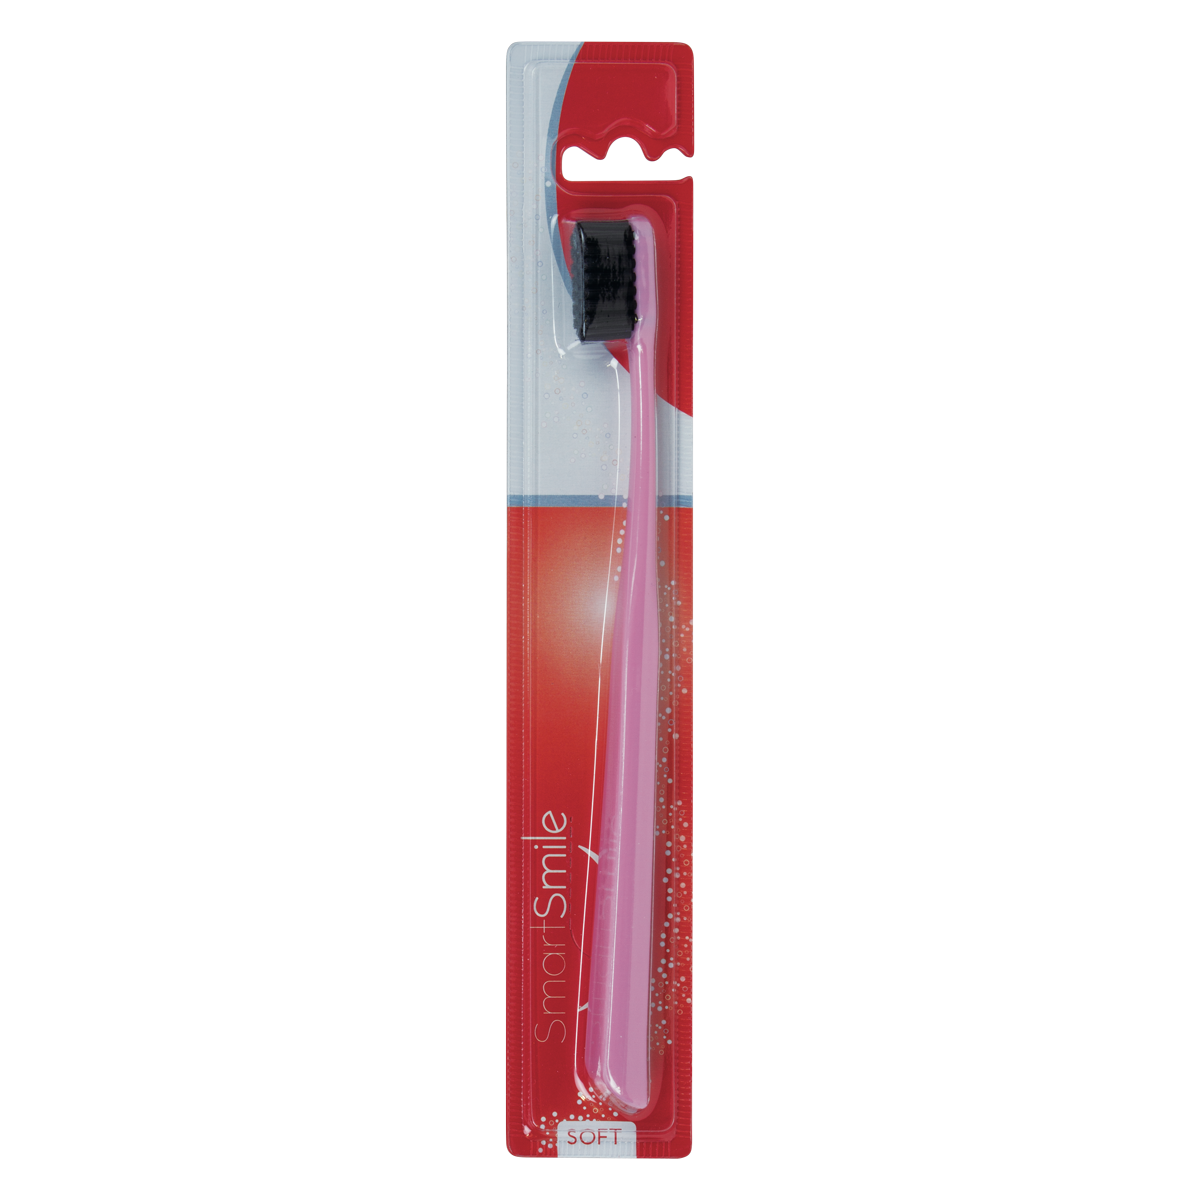 Packaging of SmartSmile Toothbrushes